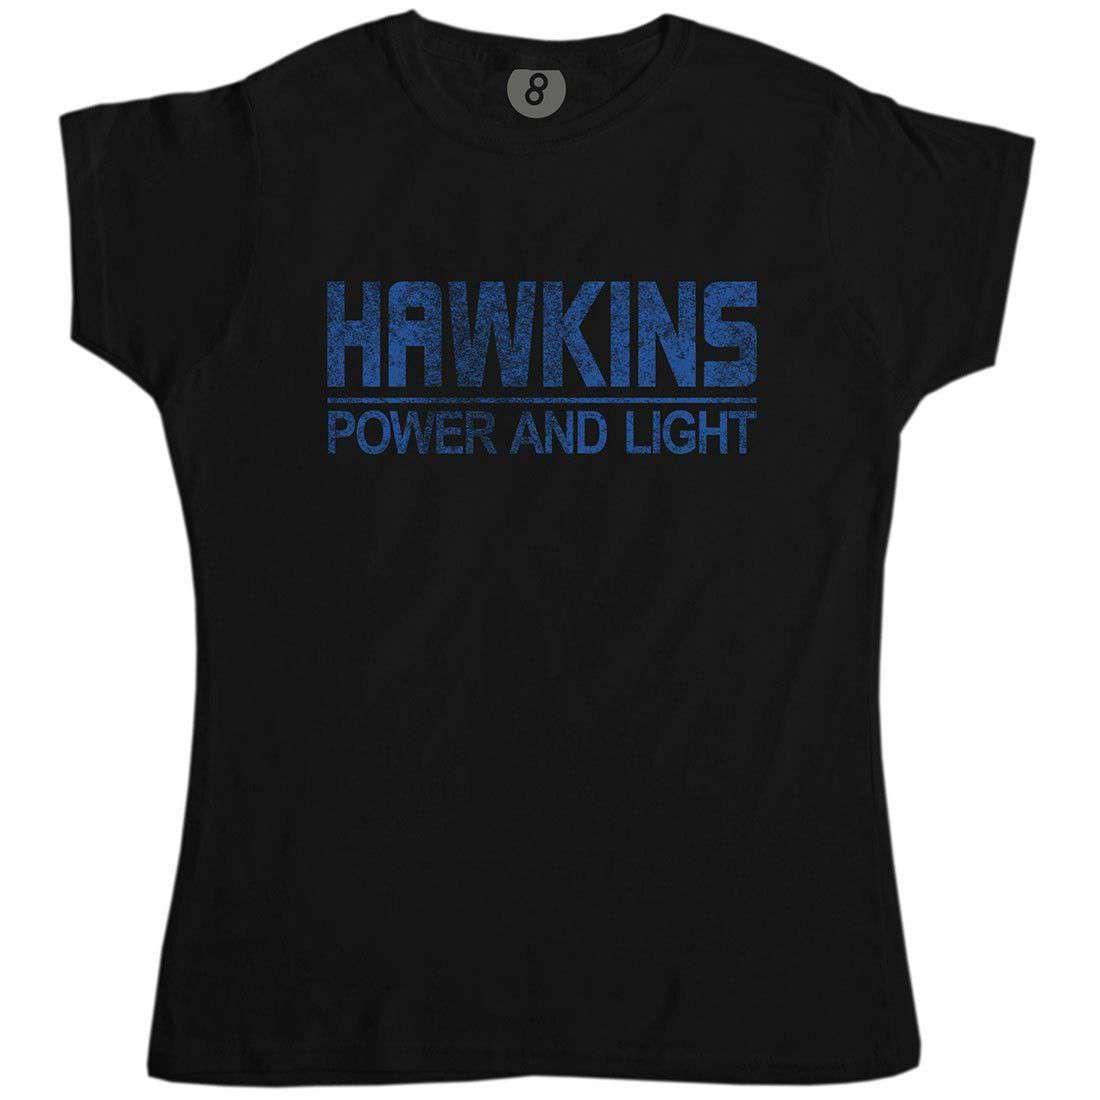 Hawkins Power And Light Womens T-Shirt 8Ball